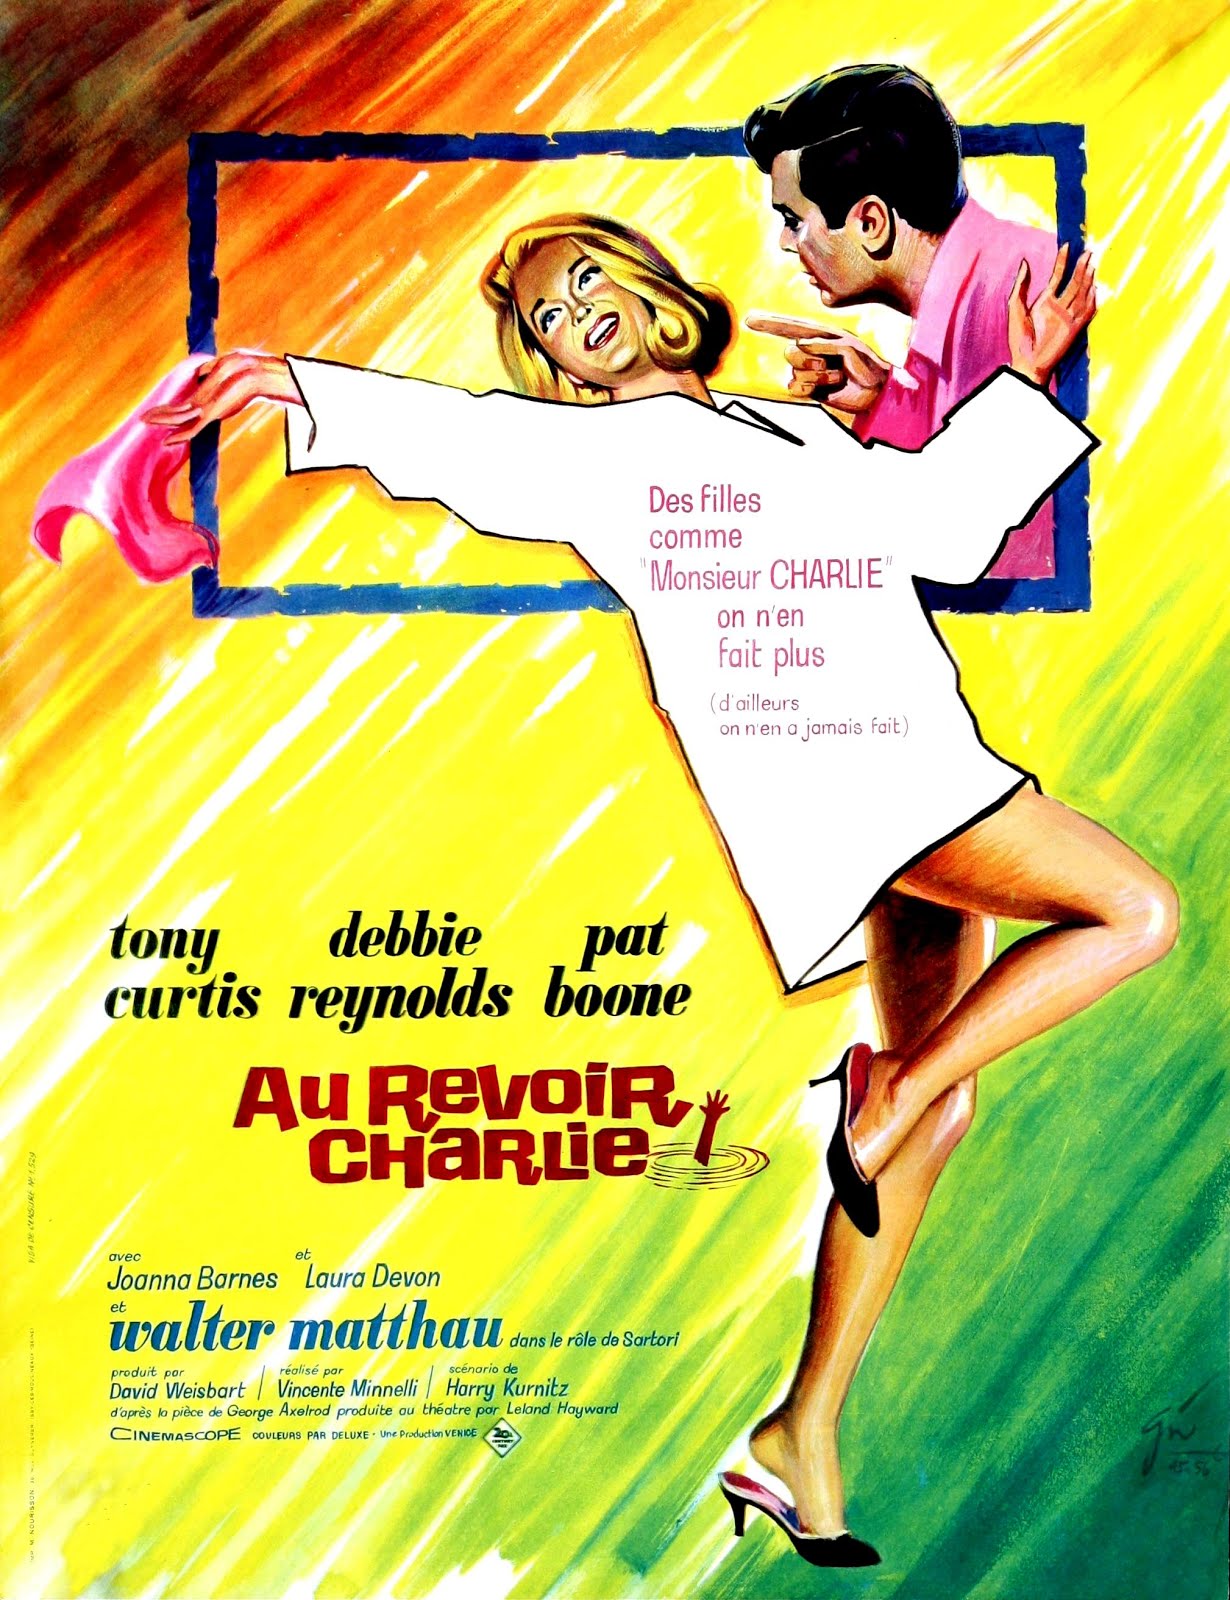 Au revoir Charlie (1964) Vincente Minnelli - Goodbye Charlie (18.03.1964 / 1964)